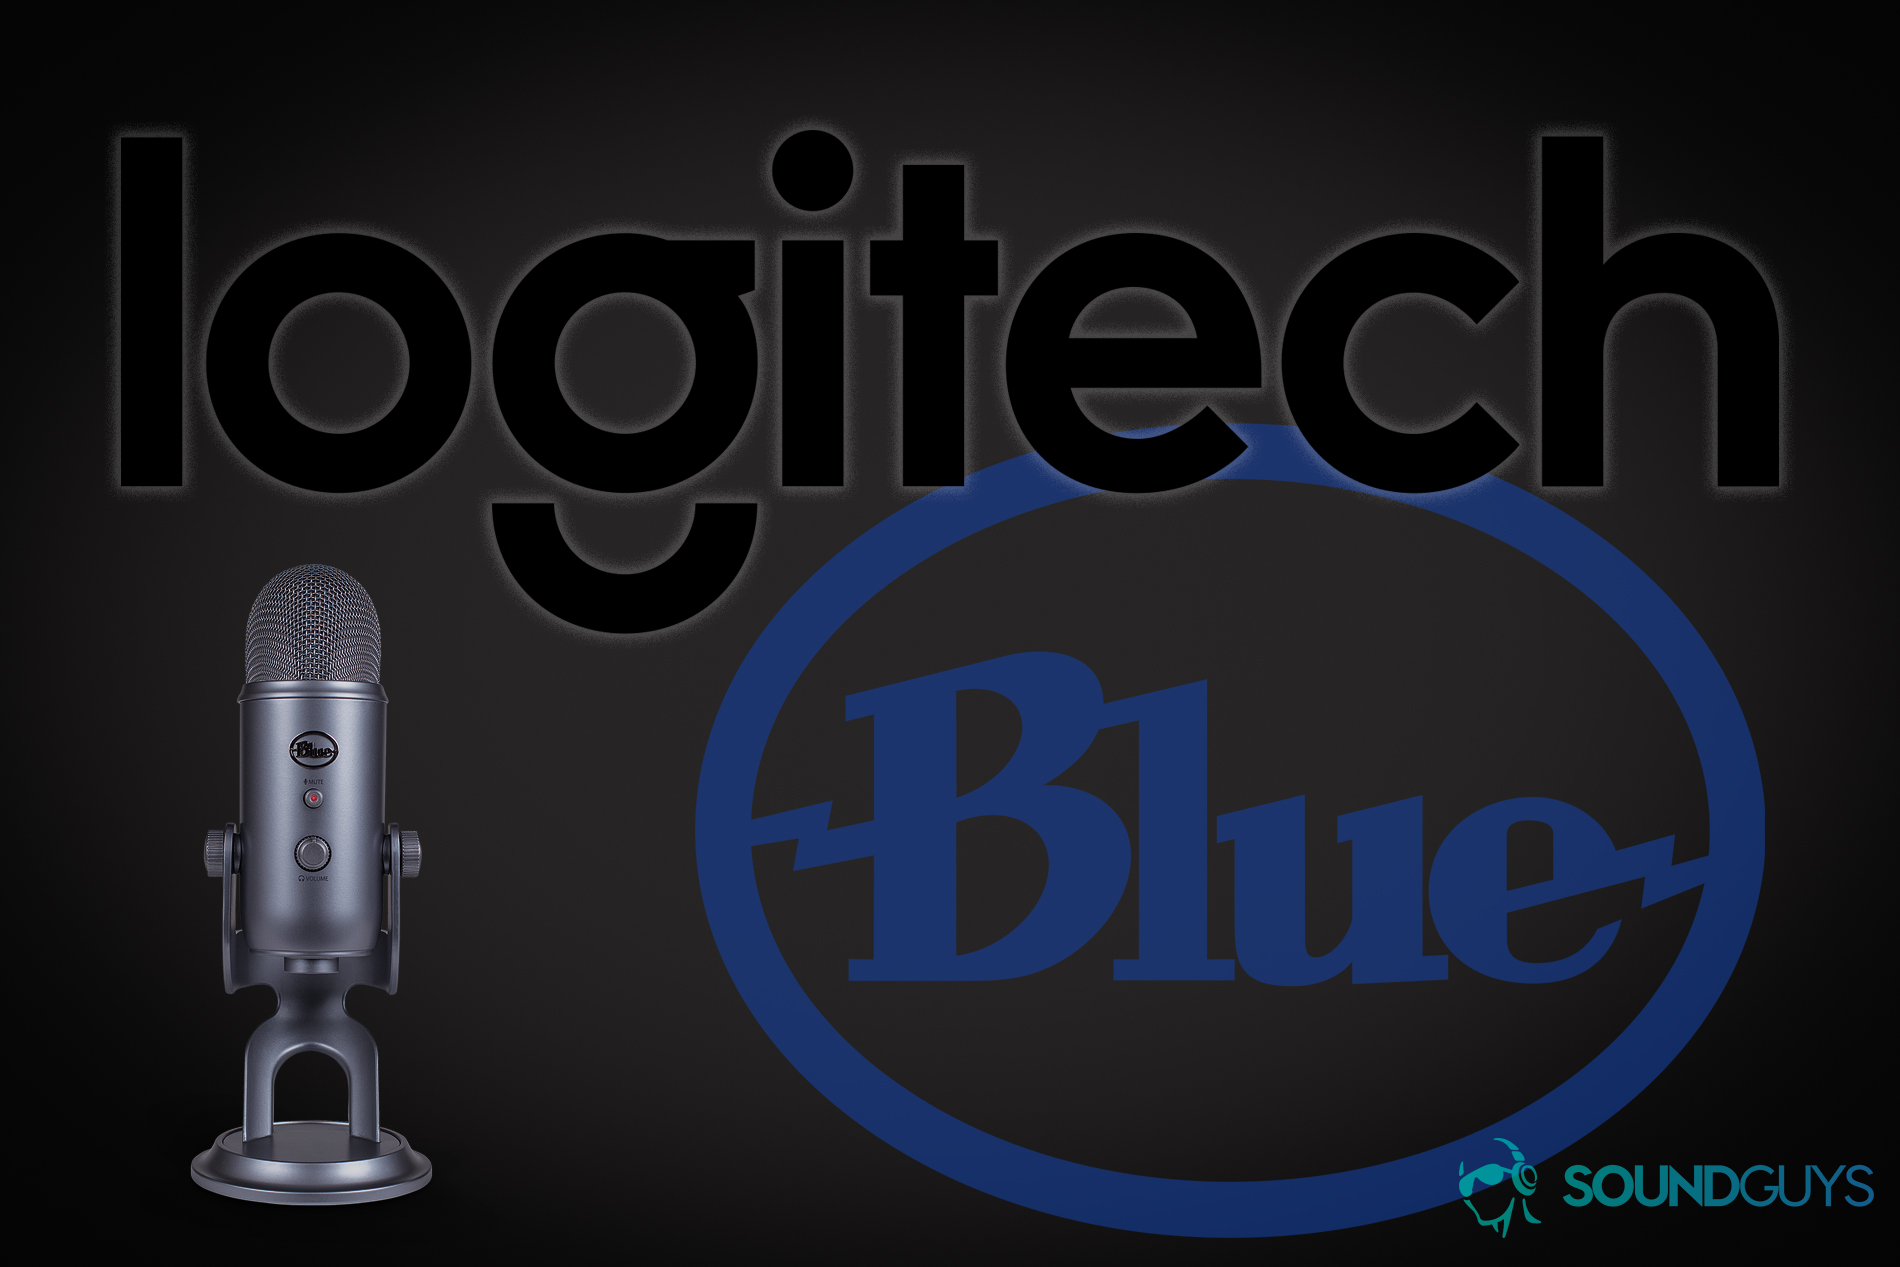 Logitech to acquire Blue Microphones - SoundGuys